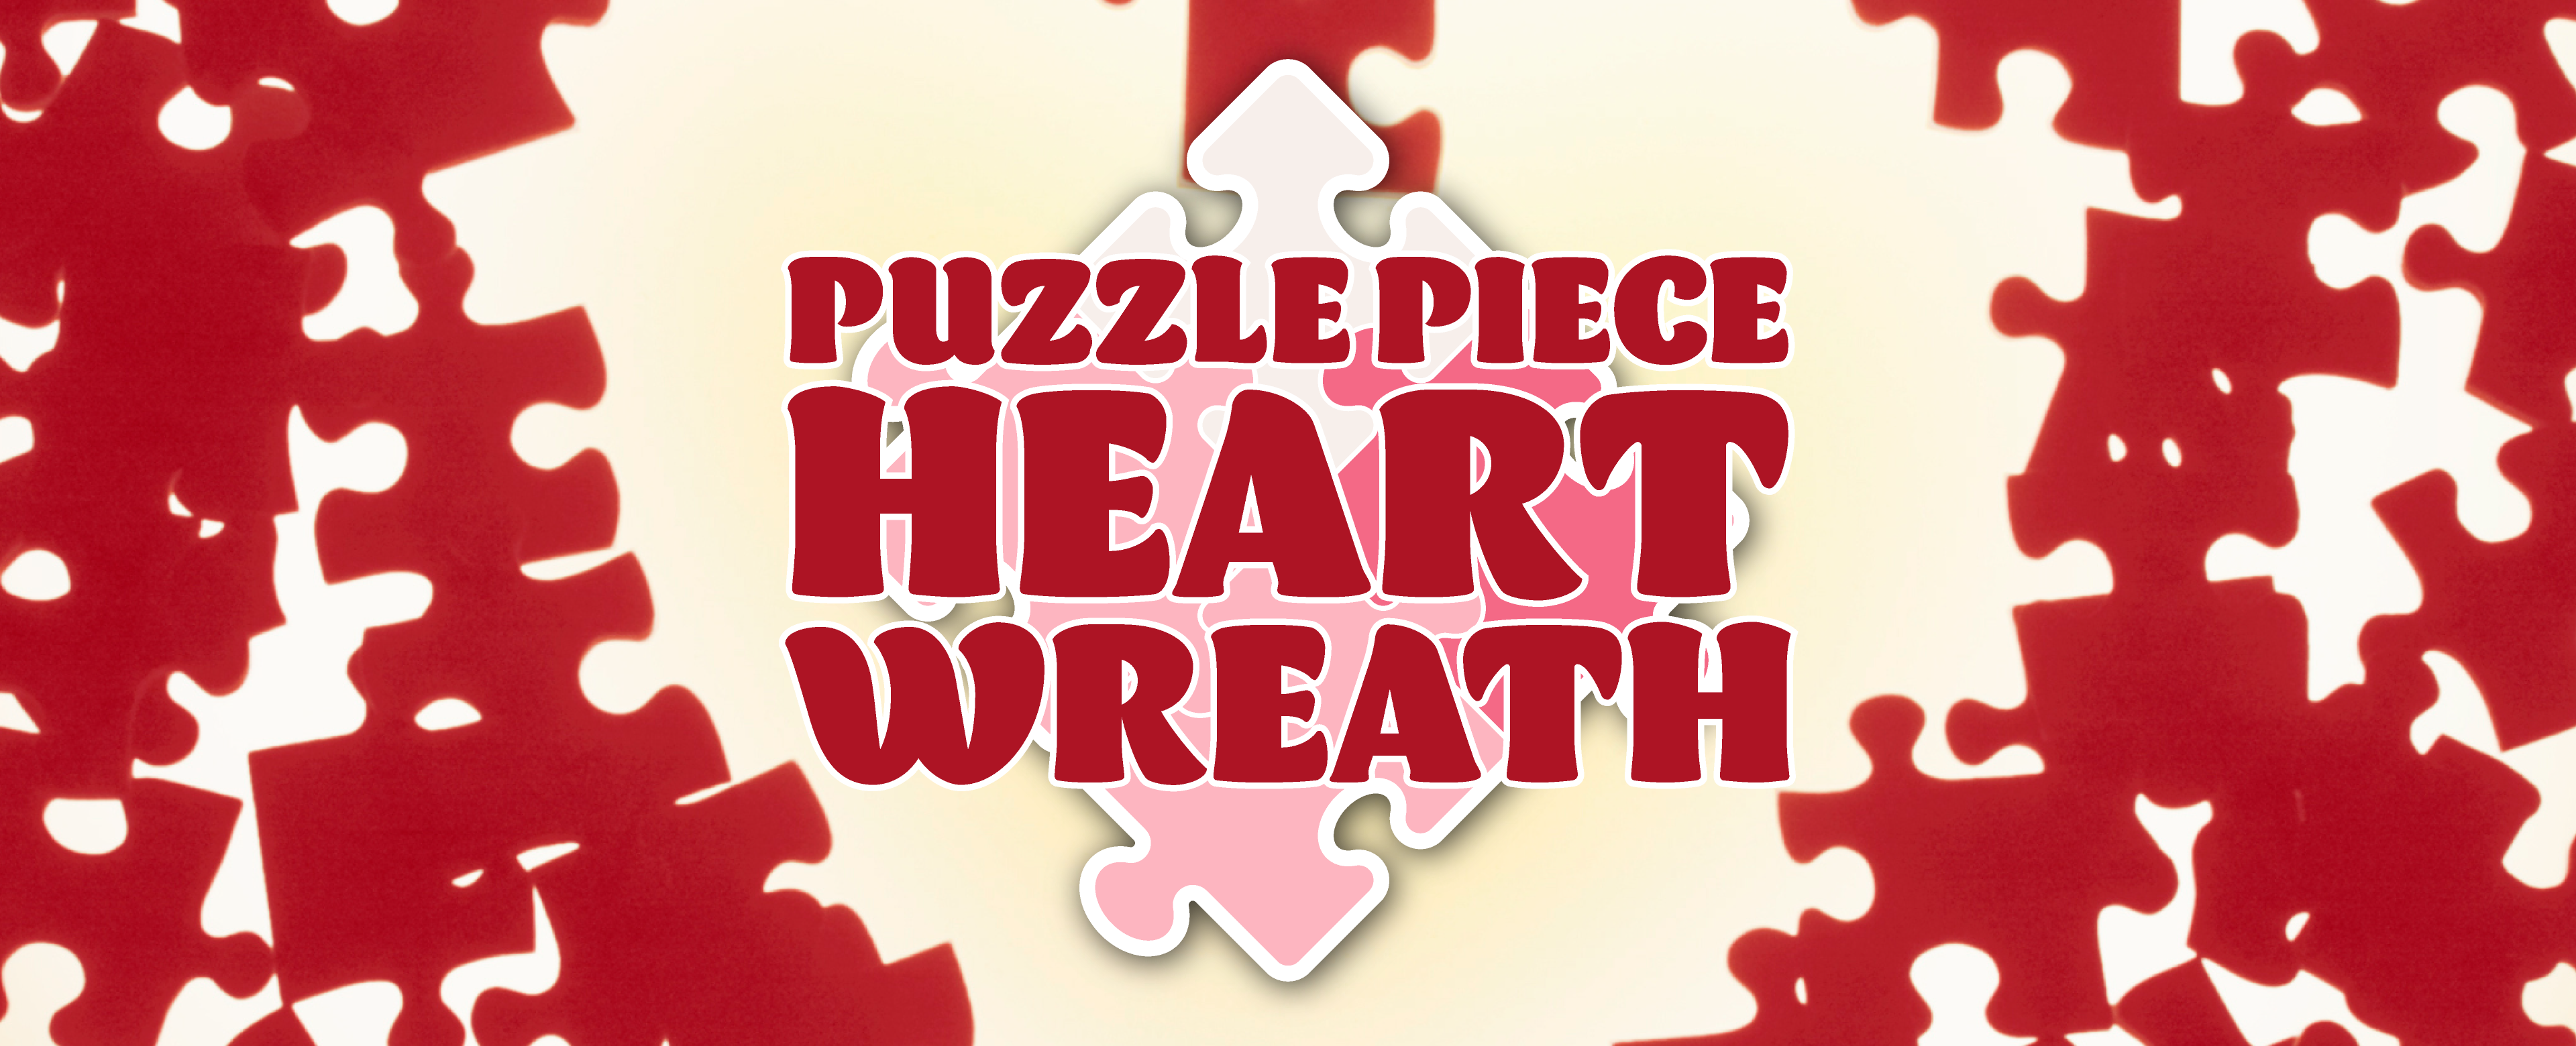 Puzzle Piece Heart Wreath